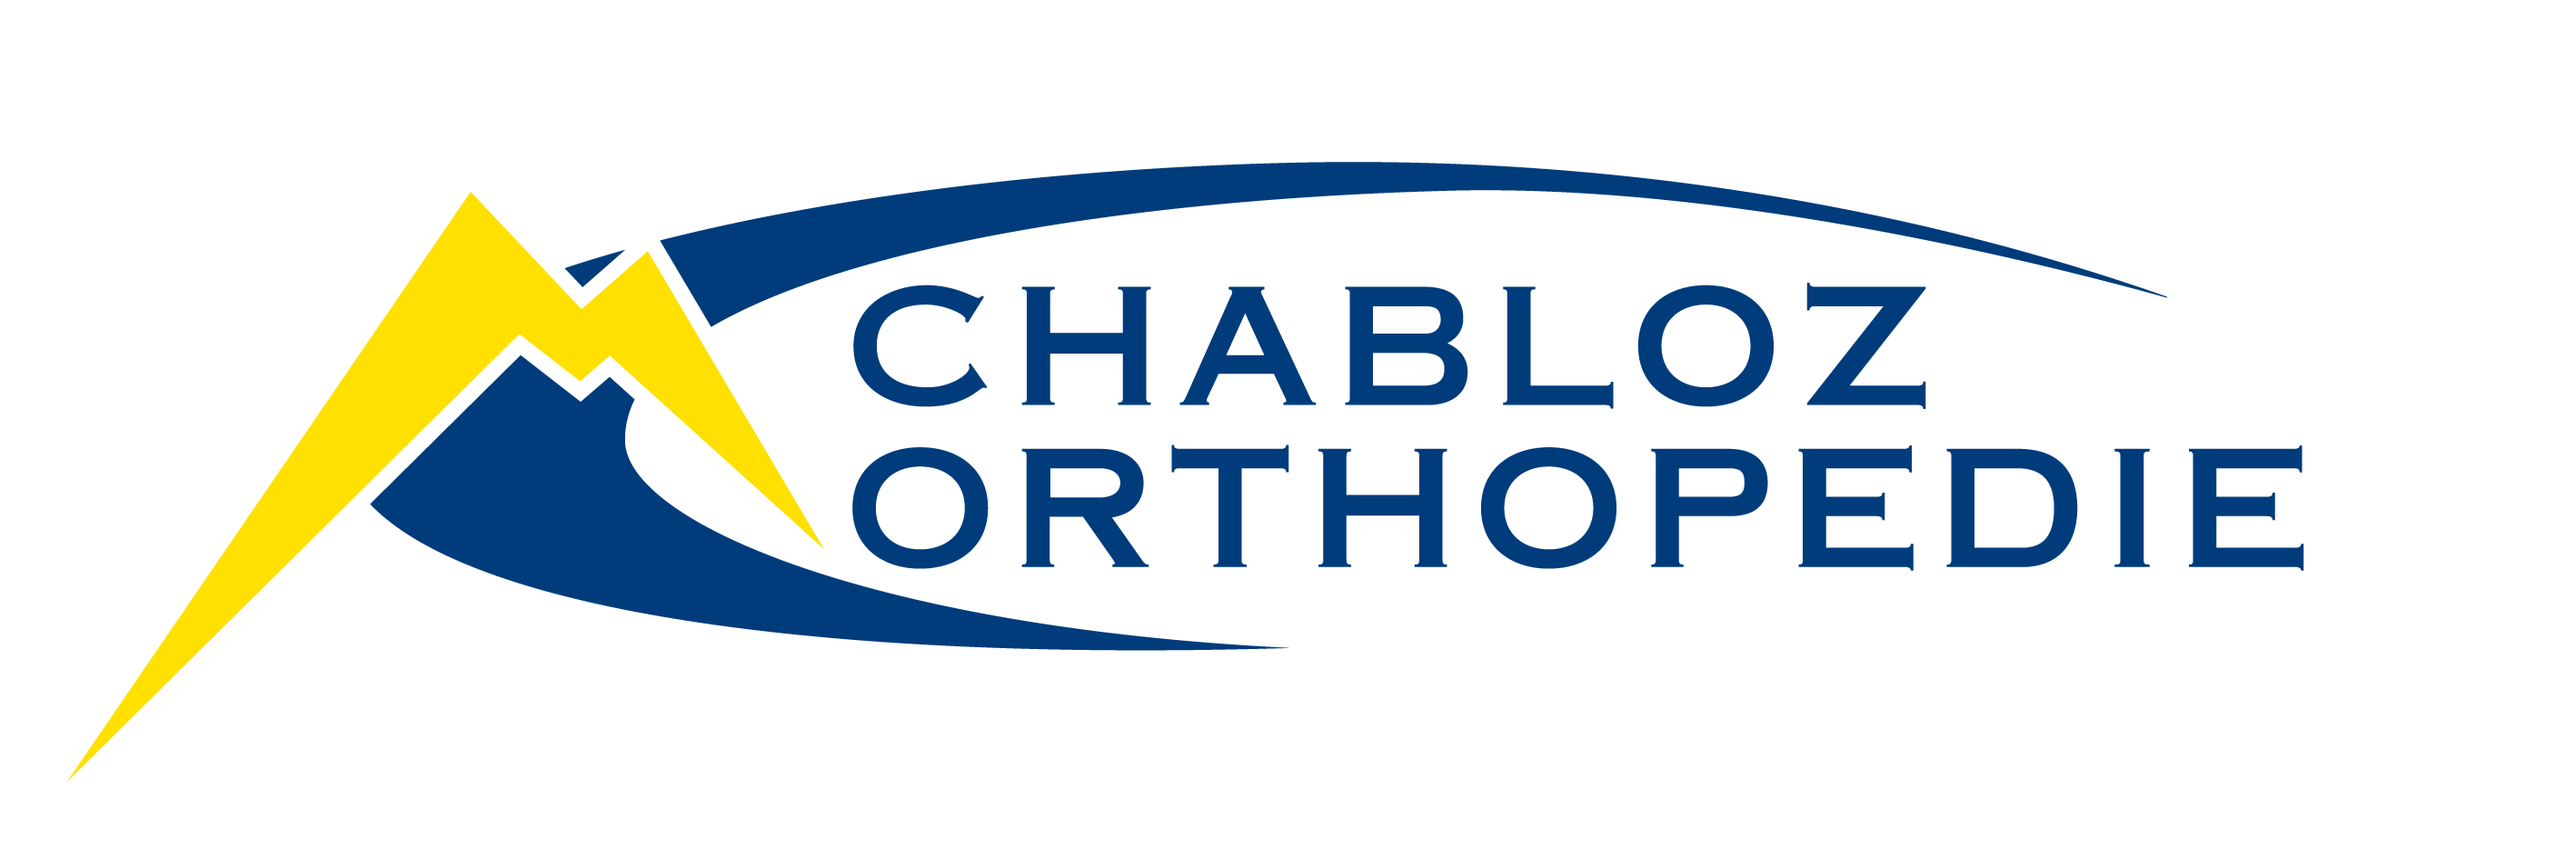 CHABLOZ ORTHOPEDIE_logo.png